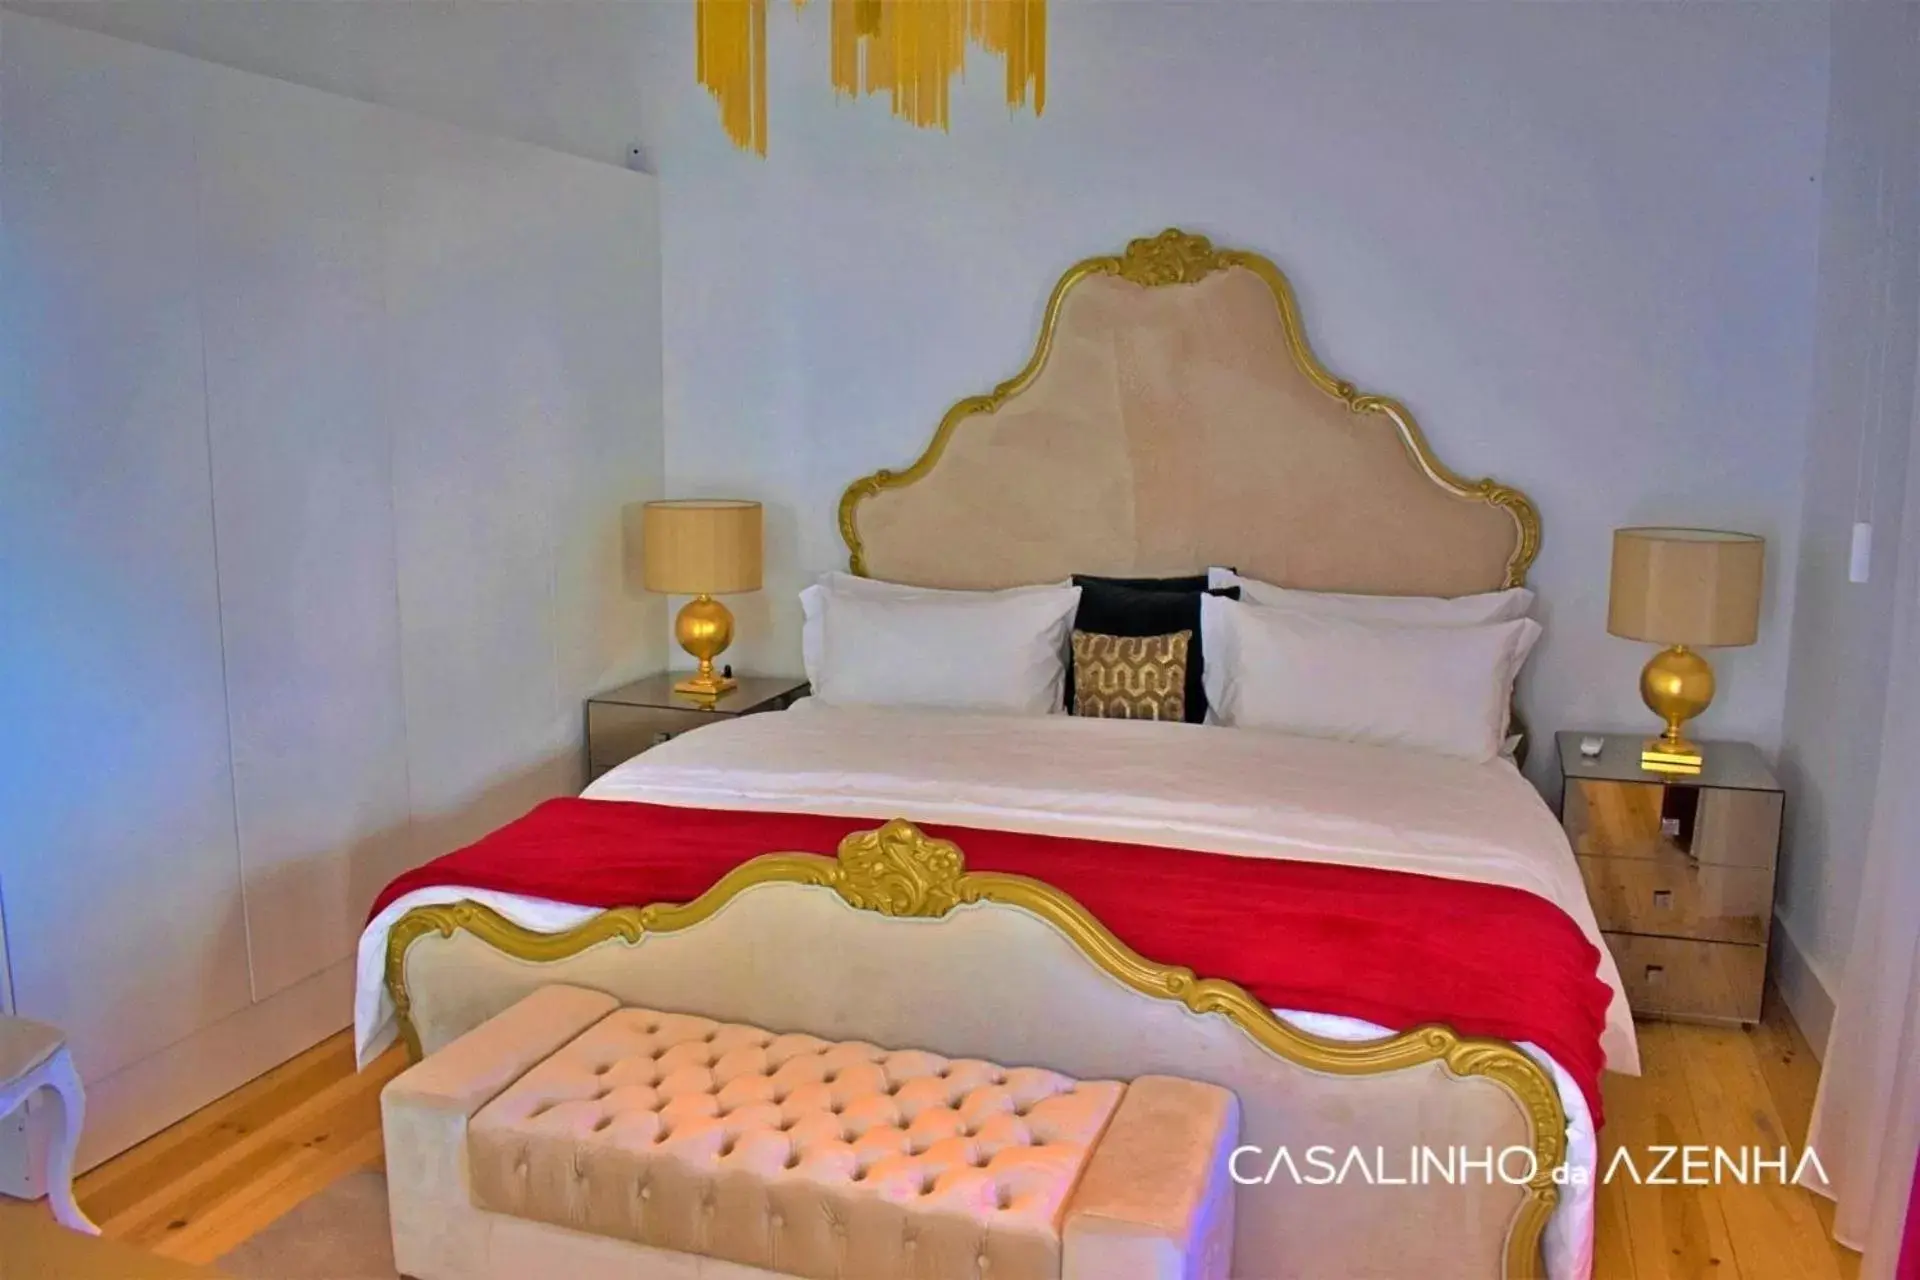 Bed in Casalinho da Azenha - Charm House